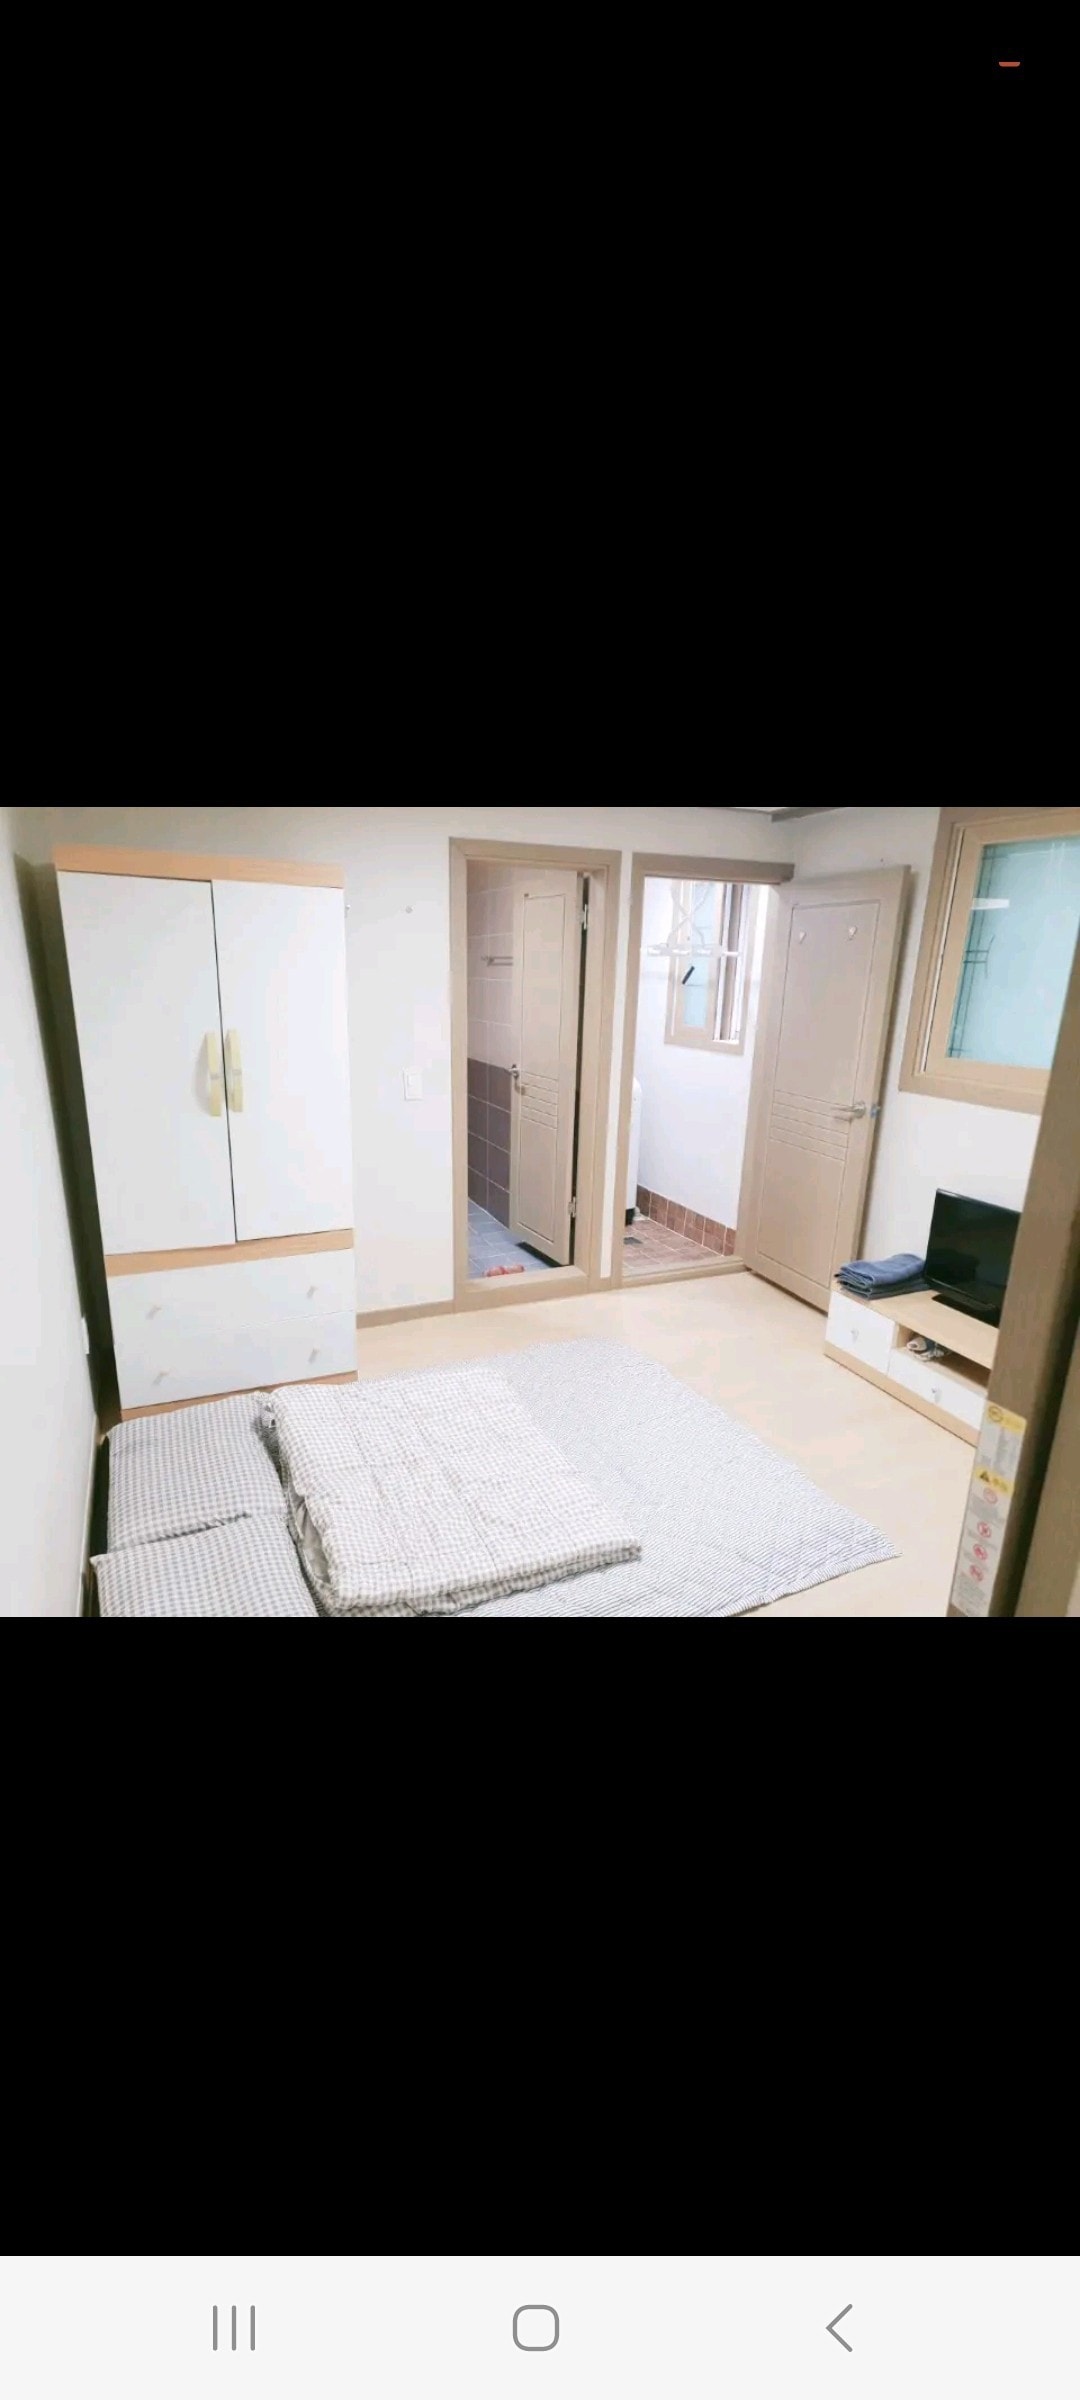 302 Pyeongtaek Songtan Seojeong-dong新别墅单间公寓短期长期全套房